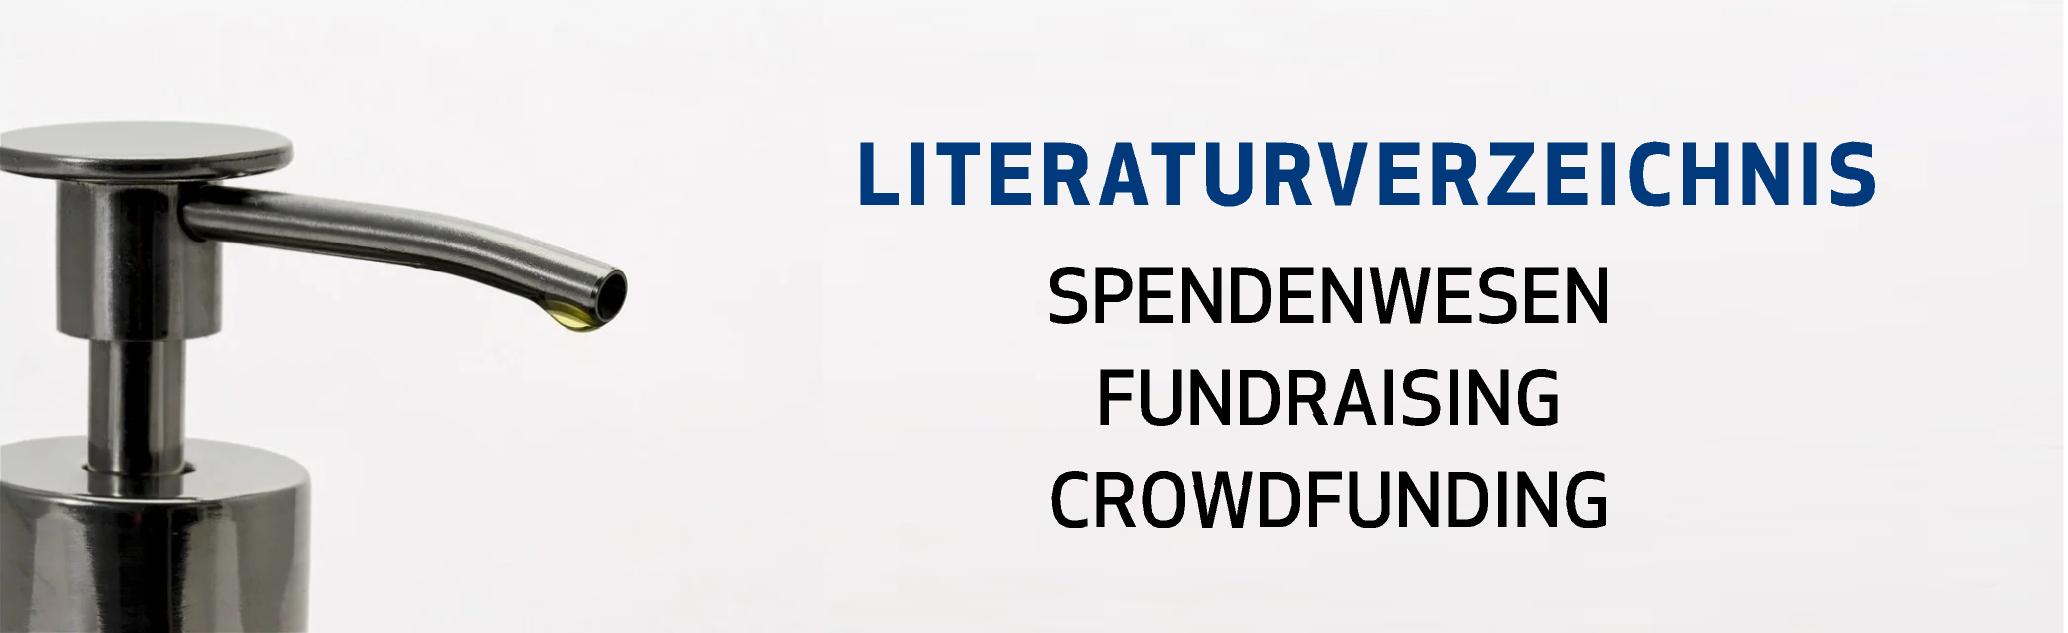 Spendenwesen Fundraising Crowdfunding